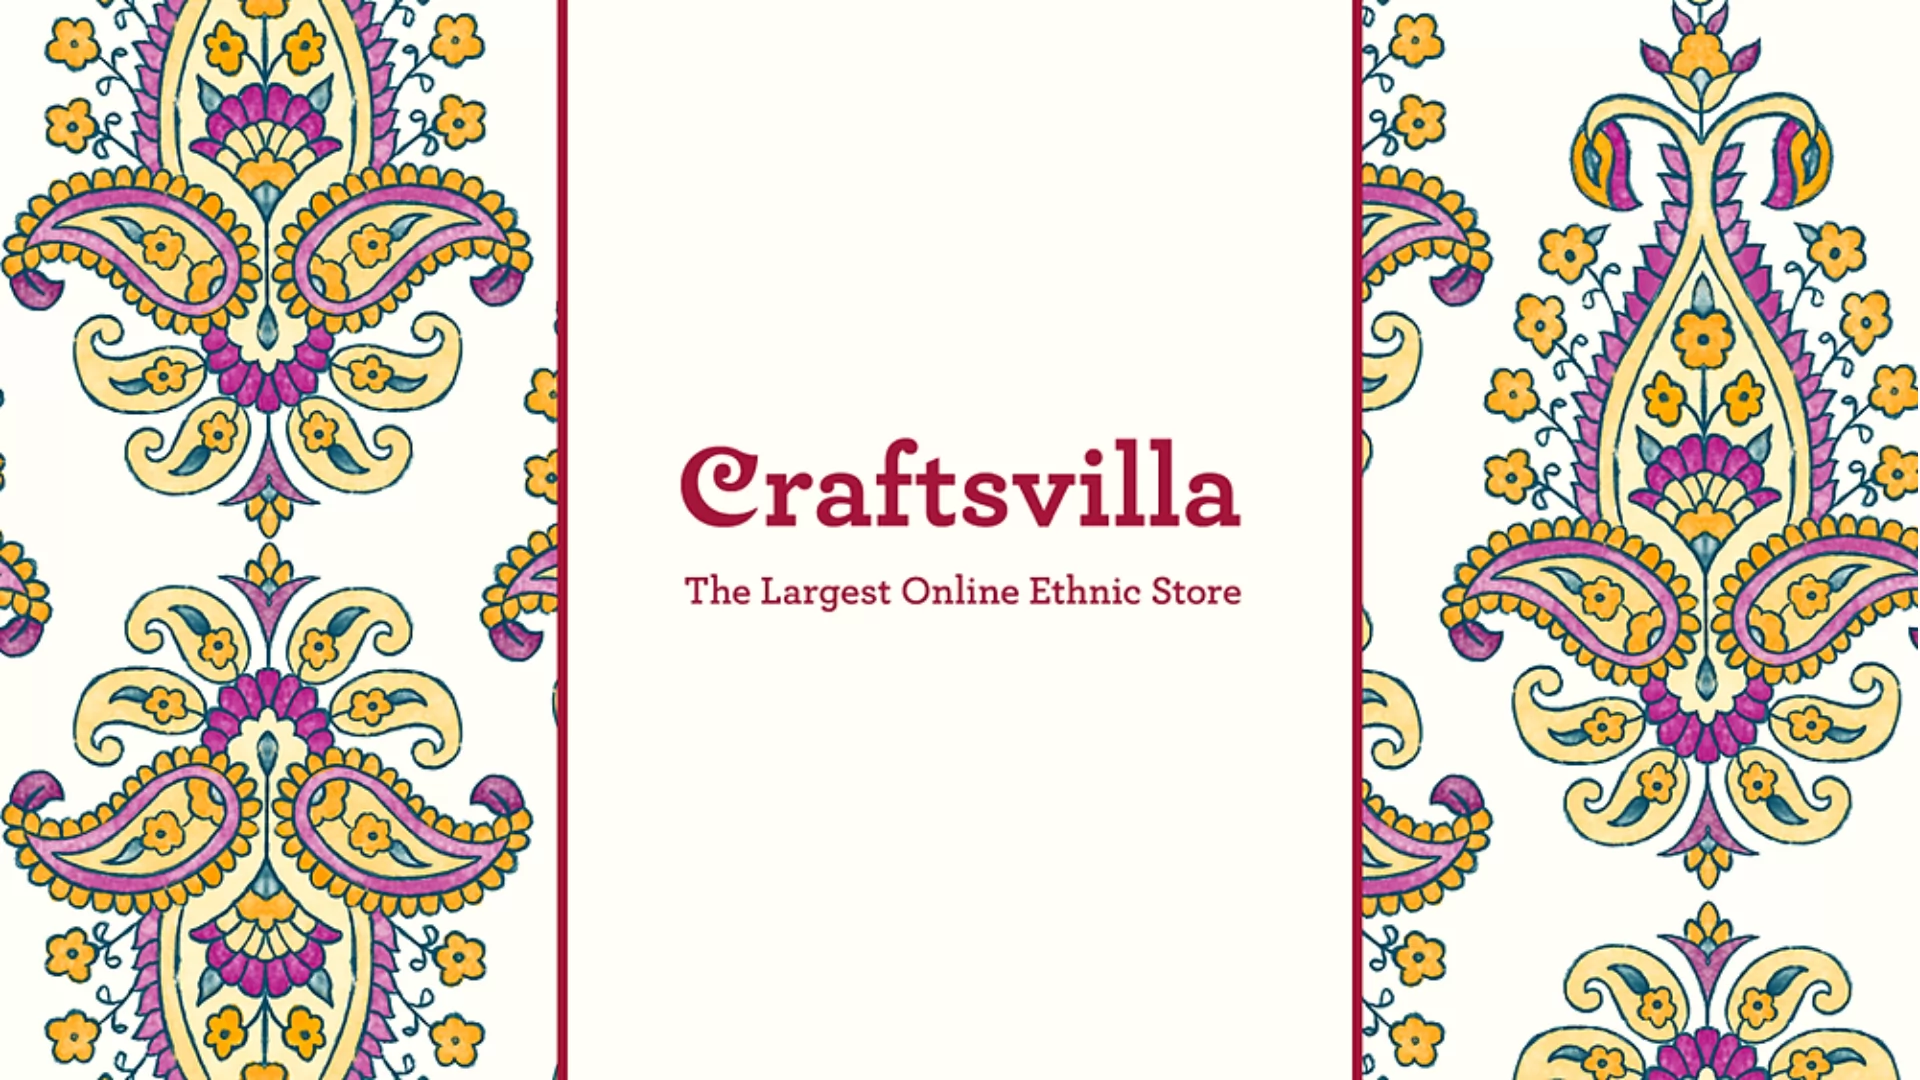 Craftsvilla.com